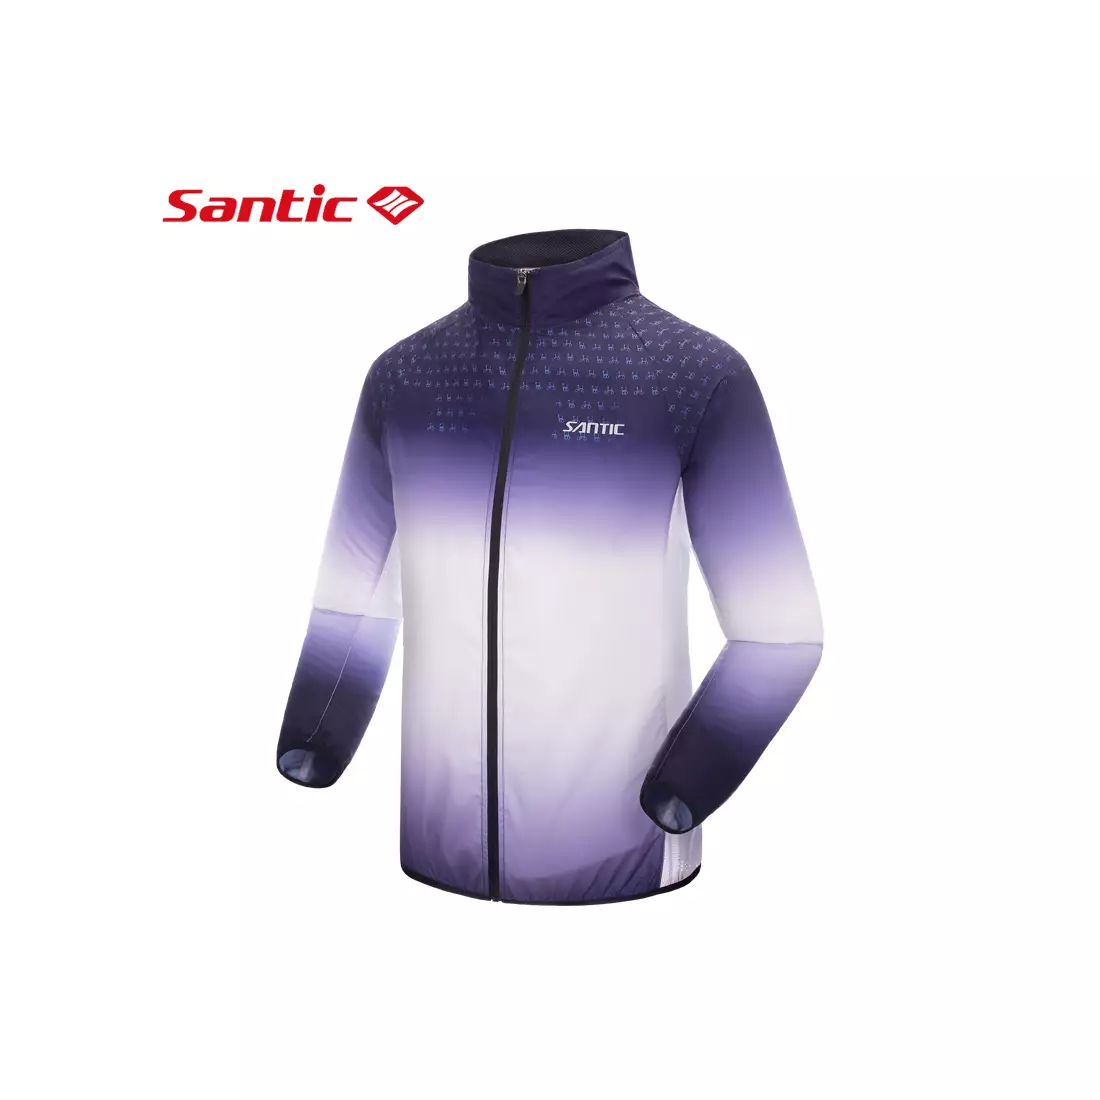 Svetlá cyklistická bunda SANTIC, biela a fialová